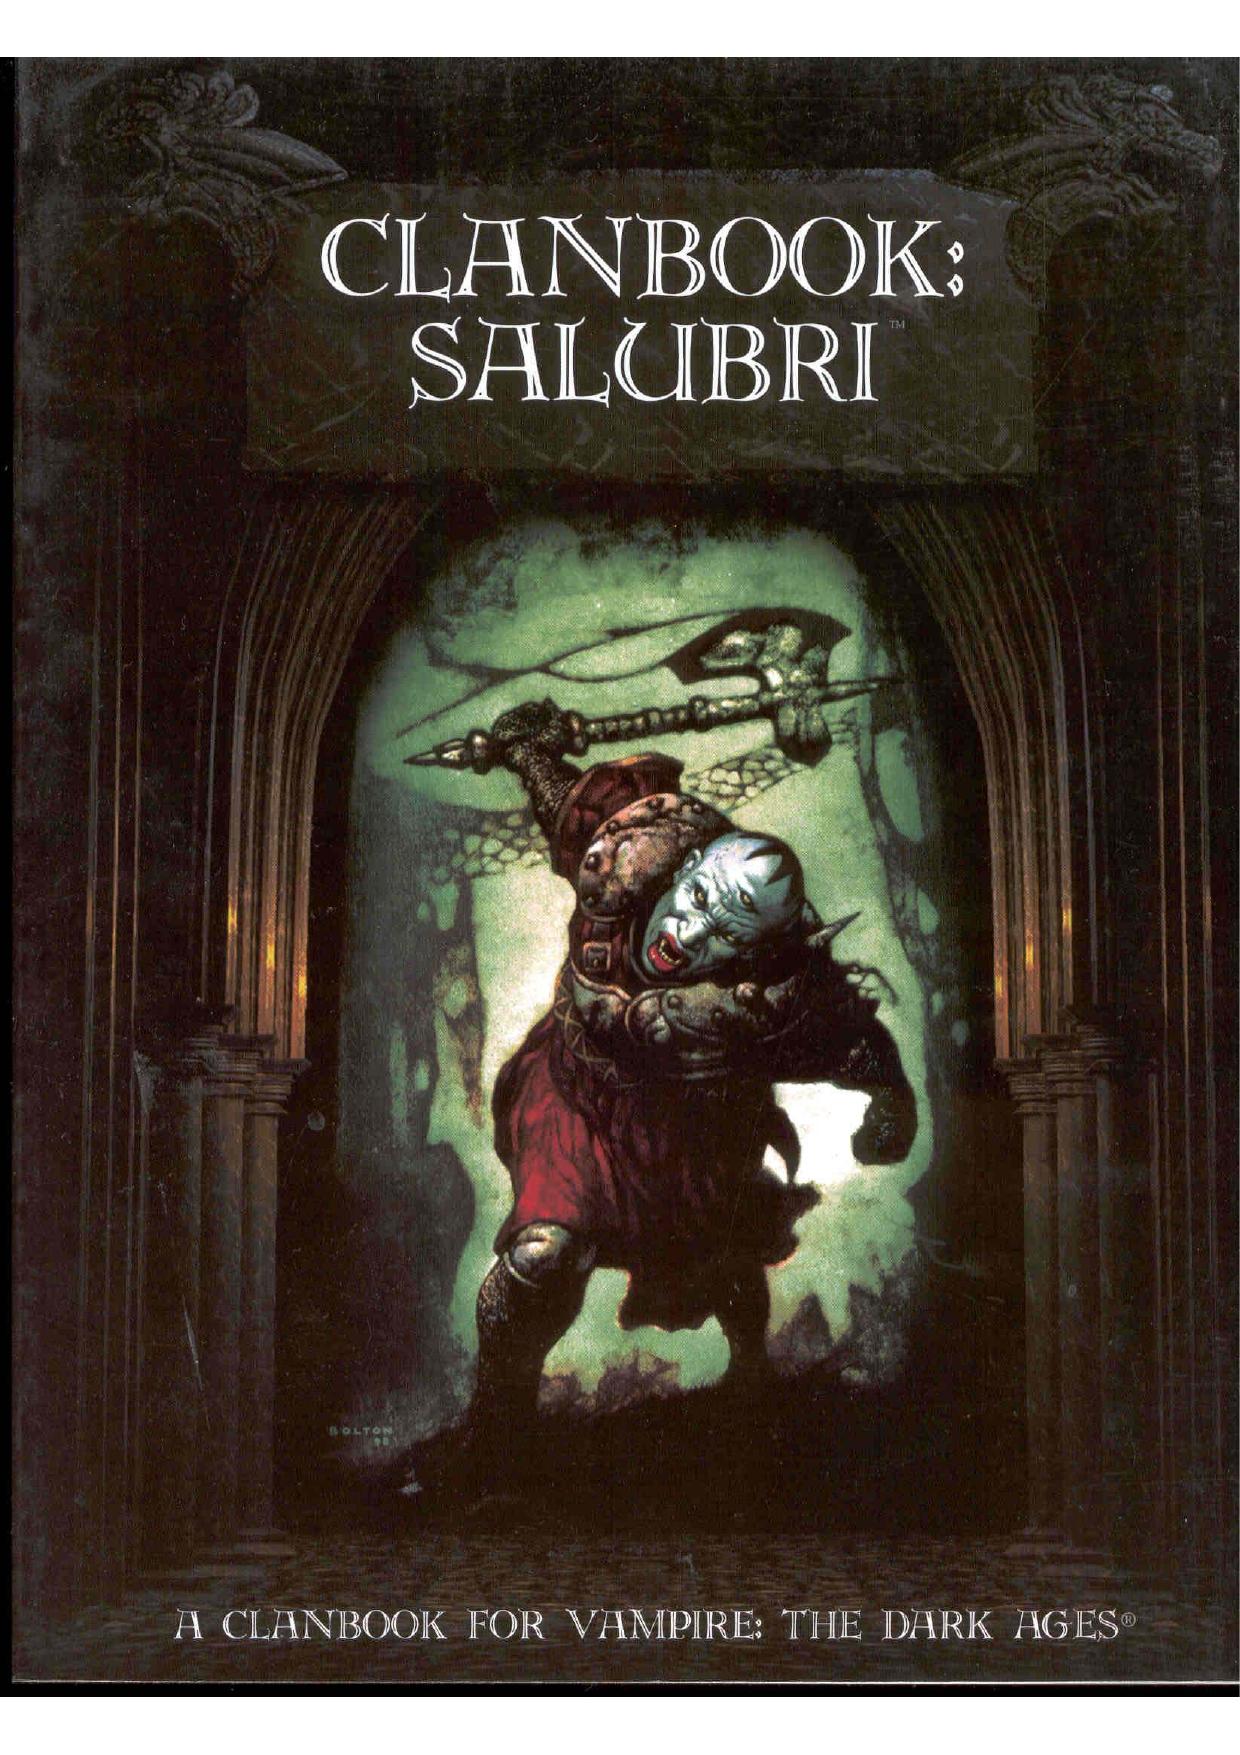 [En] WW2822 - Salubri Clanbook for Vampire the Dark Ages